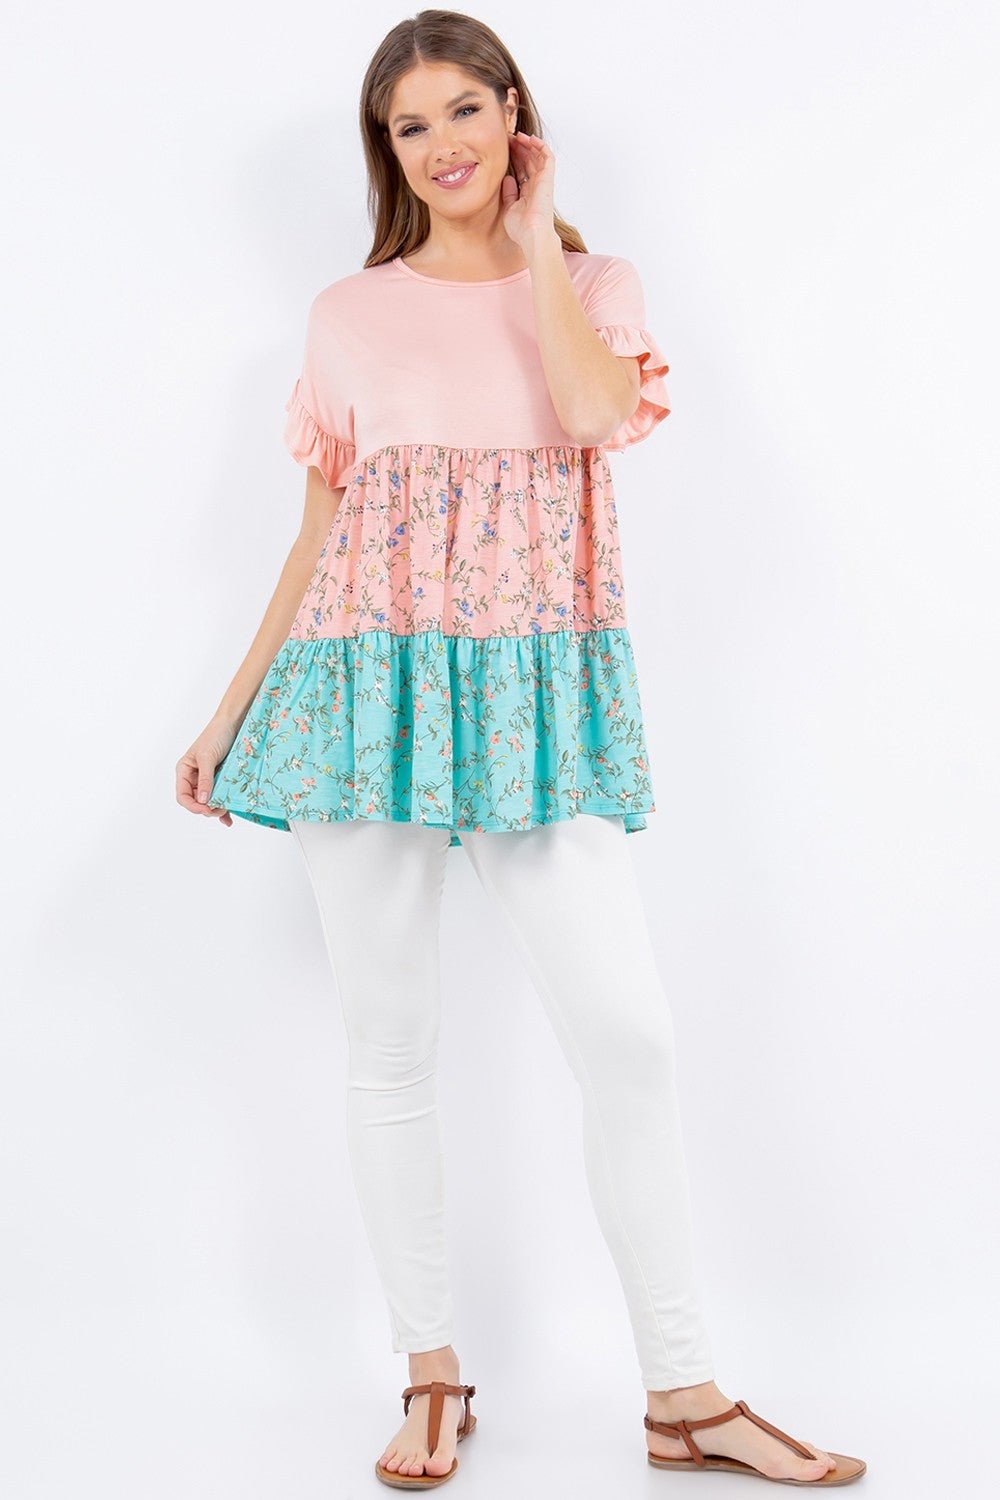 Floral Color Block Ruffled Short Sleeve Top in Peach MintTopCeleste Design